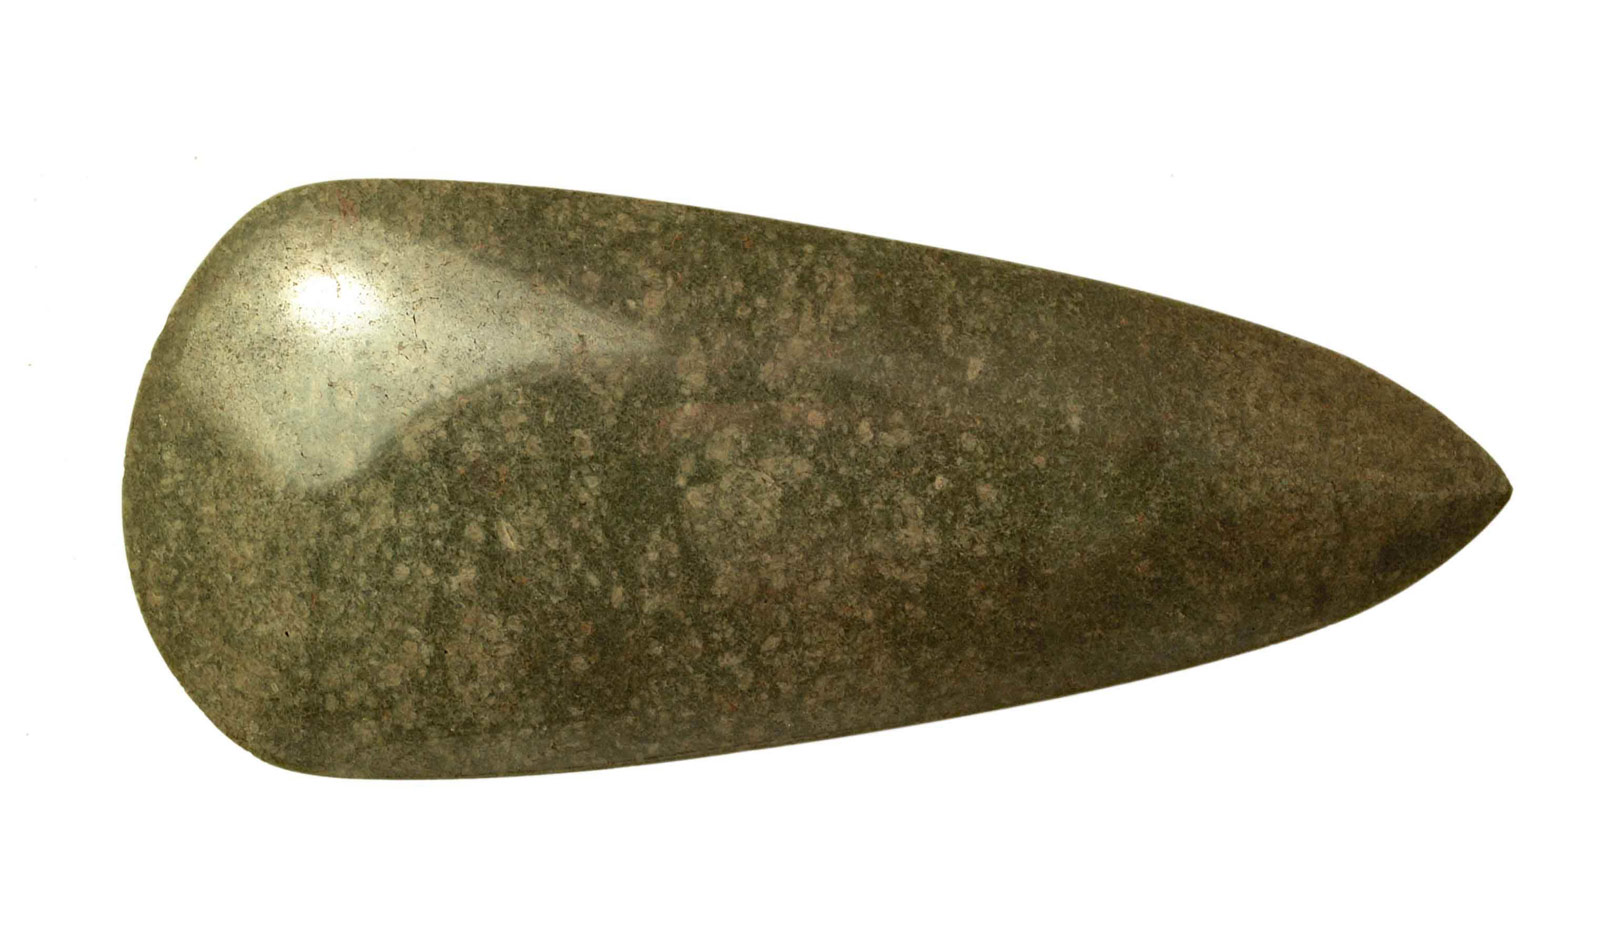 Jadeite prehistoric axe found near Mortlake, in the London Before London gallery.